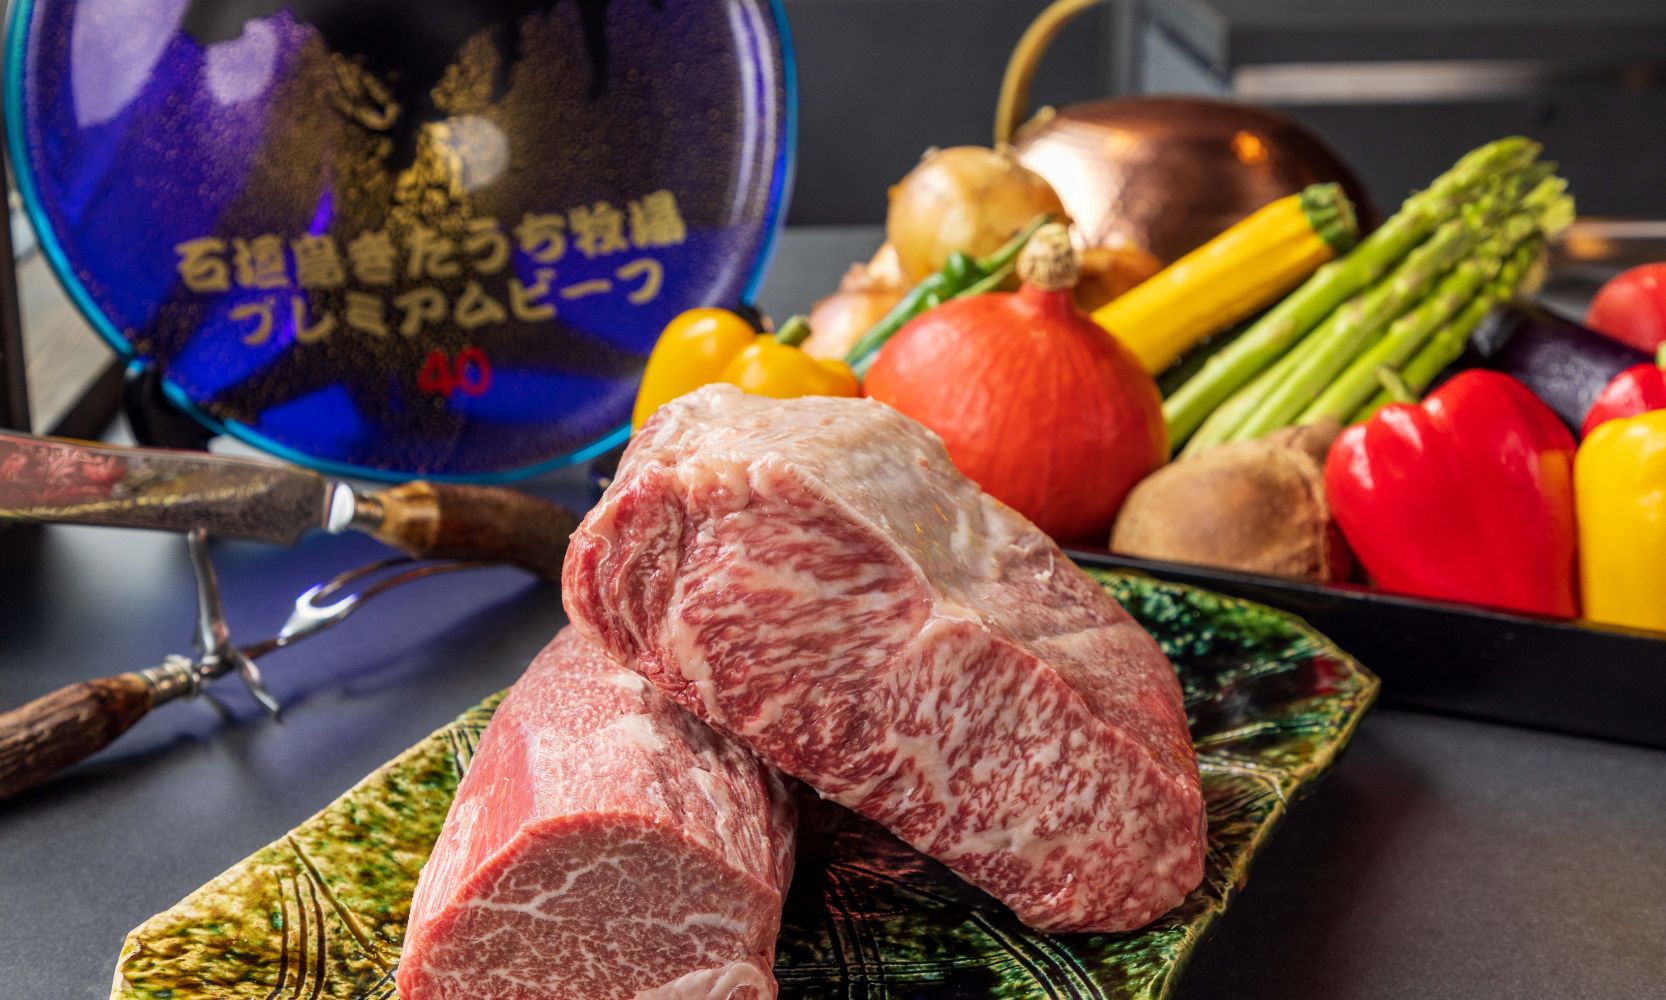 Hakone Ryokan to Open Teppanyaki Restaurant on July 14, Offers Special Half-Price Deal